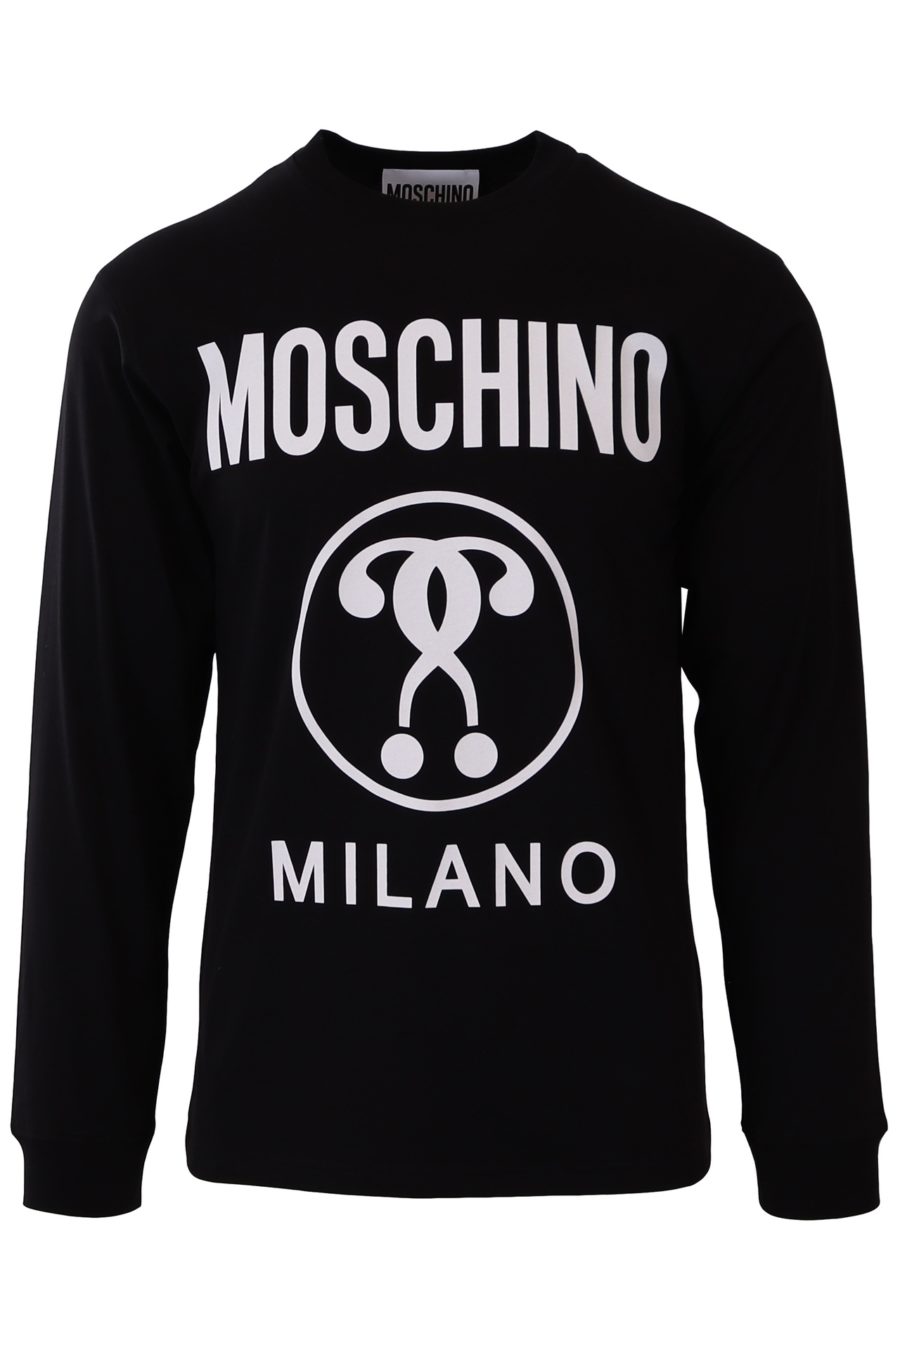 Camiseta manga larga Moschino Couture negra con logo - 2be6884ef085b4431d9eba4ff4fbc4a555a8b945